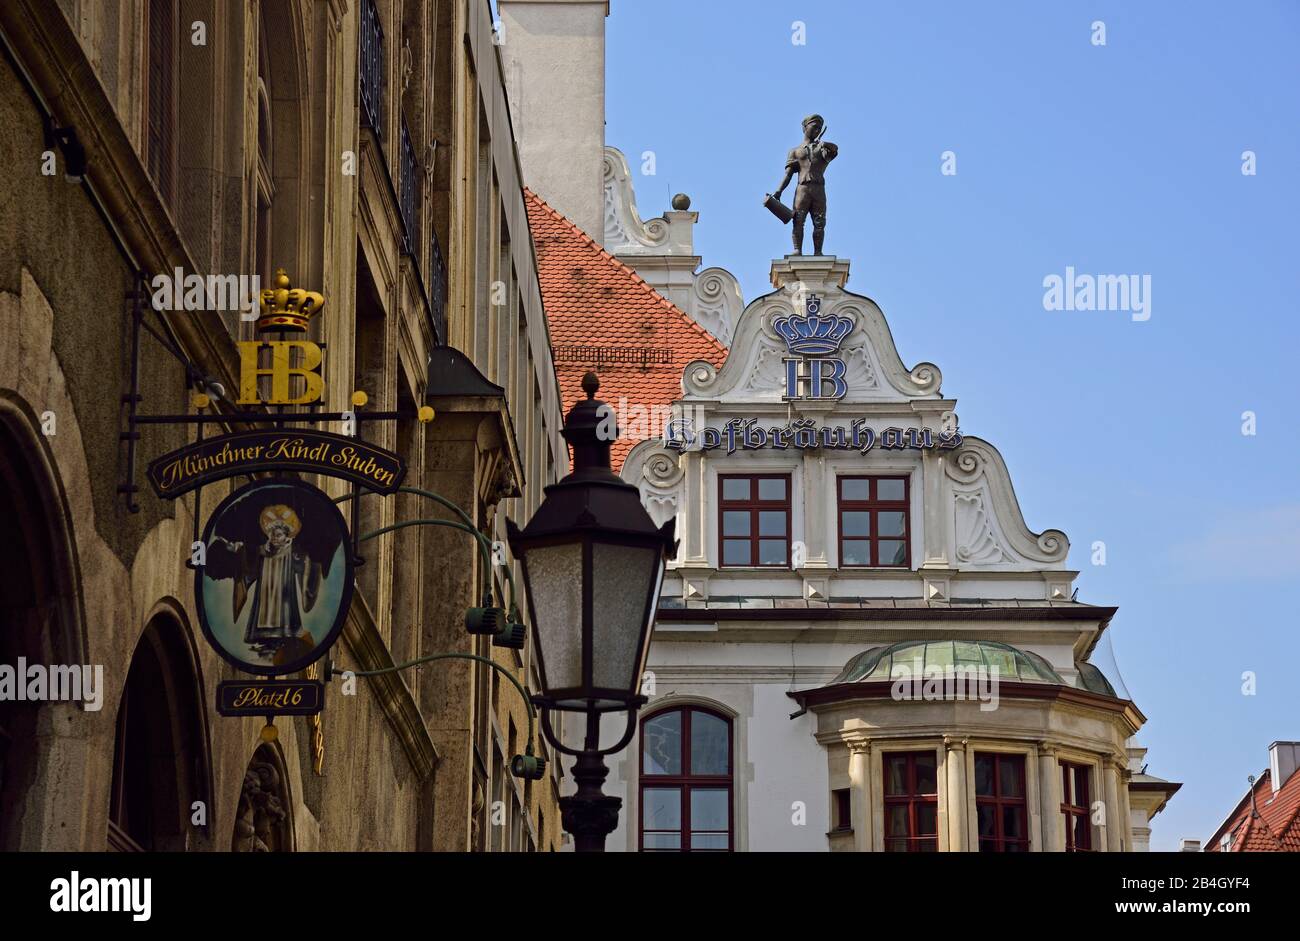 Europe, Germany, Bavaria, City of Munich, Old Town, Hofbräuhaus am Platzl, Münchner Kindl Stuben, Stock Photo